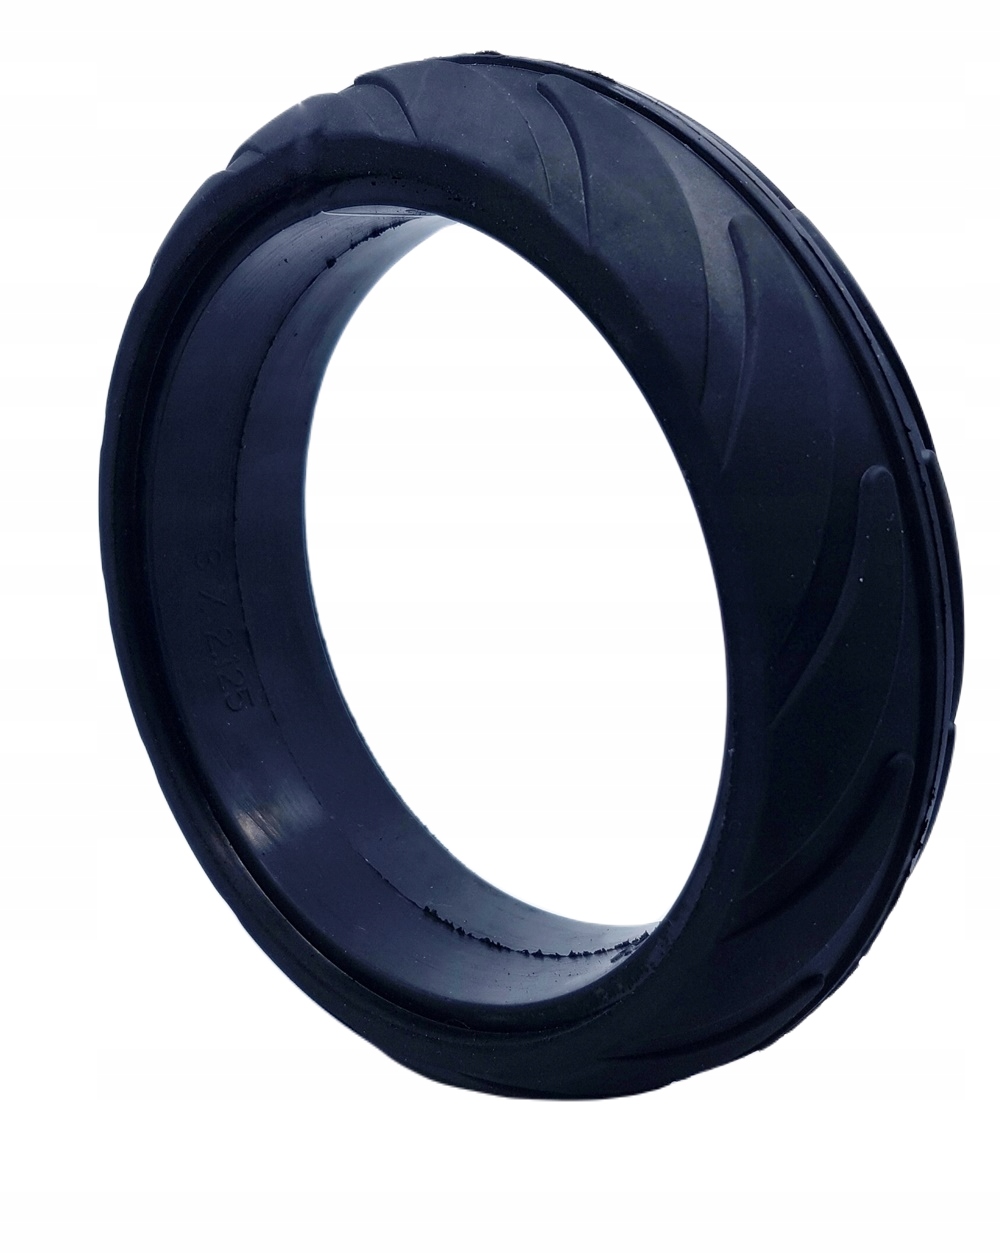 8 inch Solid Tyre 8x2.125 For Ninebot Segway ES1/ES2/ES3/ES4